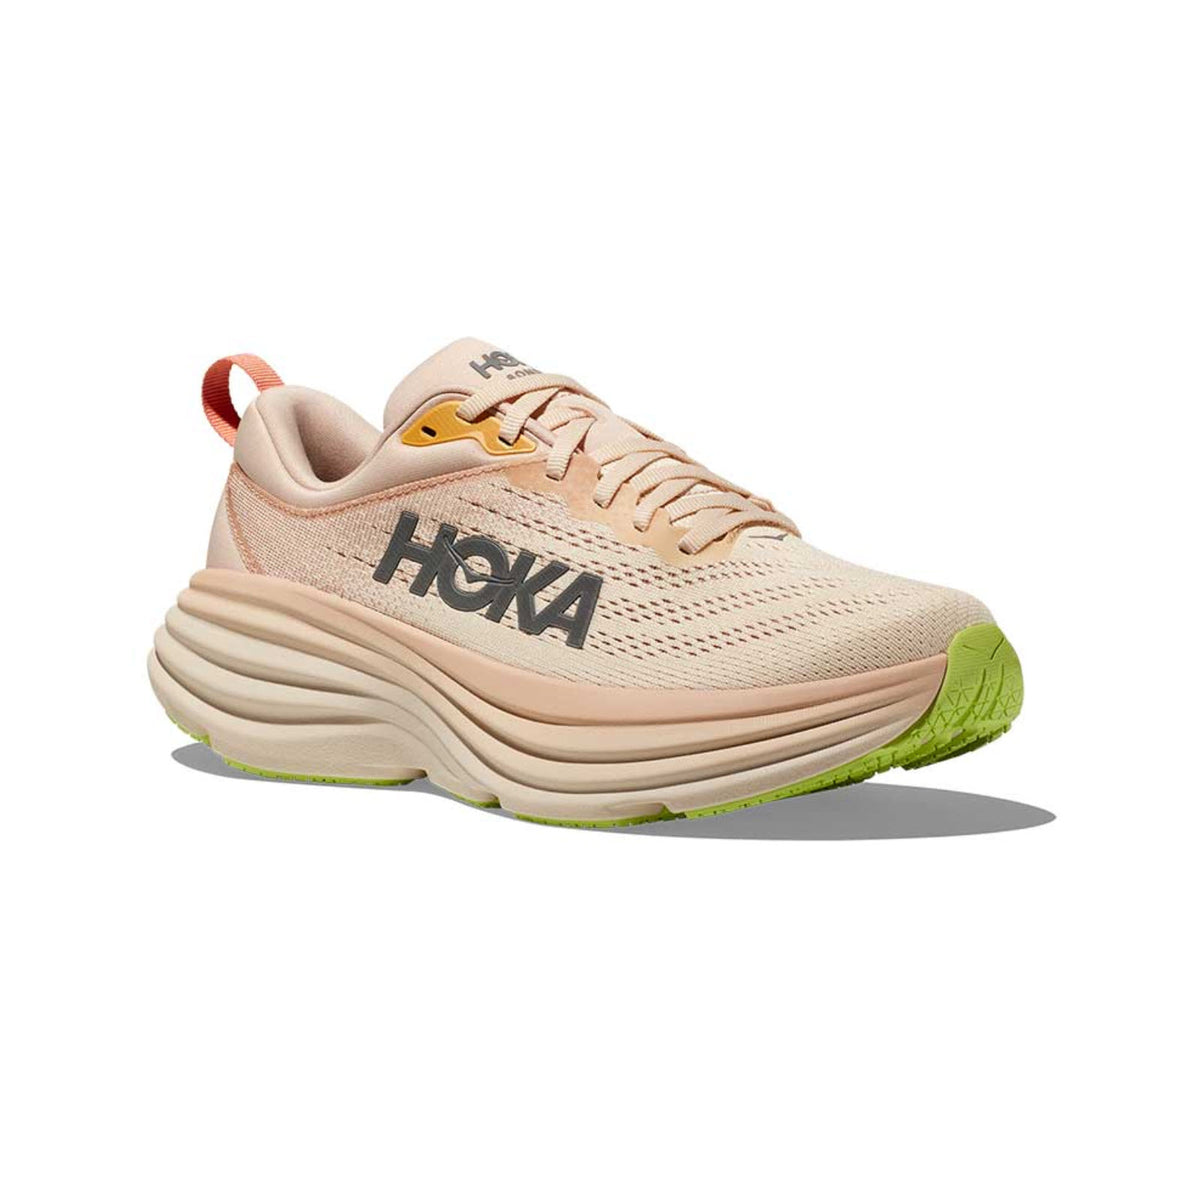 A single HOKA BONDI 8 CREAM/VANILLA - WOMEN running shoe with an ultra-cushioned sole displayed against a white background.